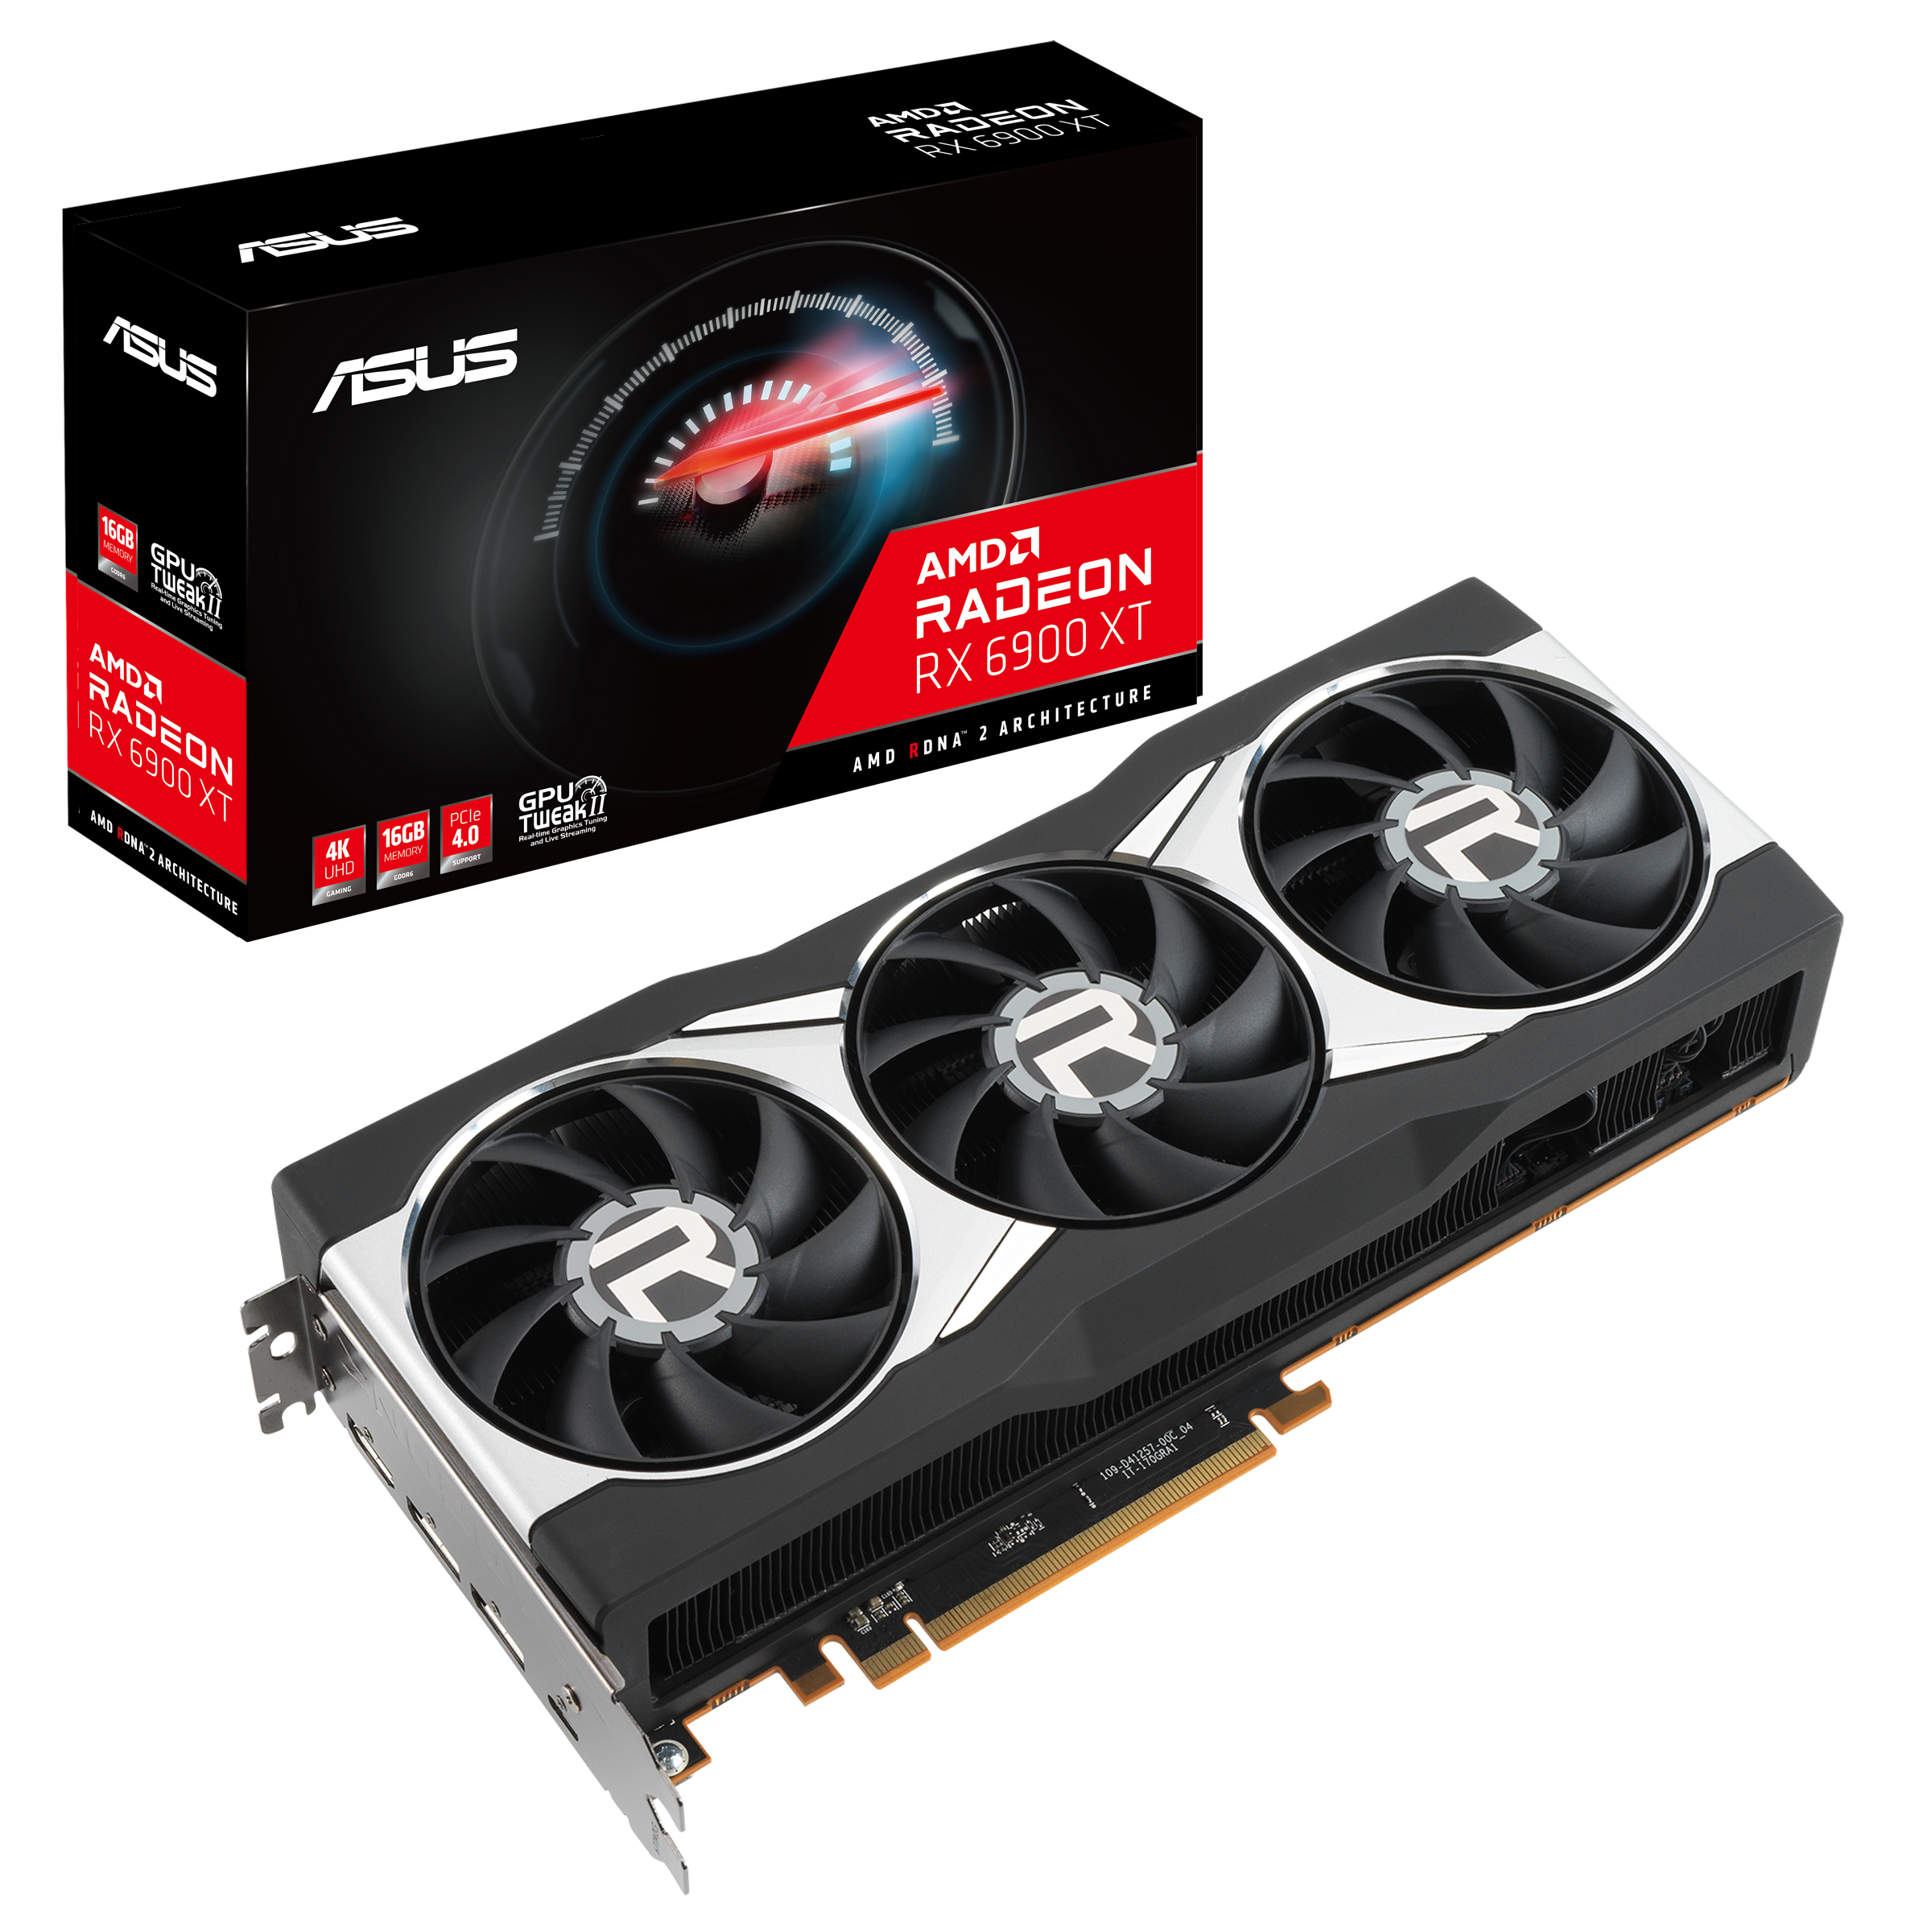  AMD Radeon RX 6900 XT : Electronics